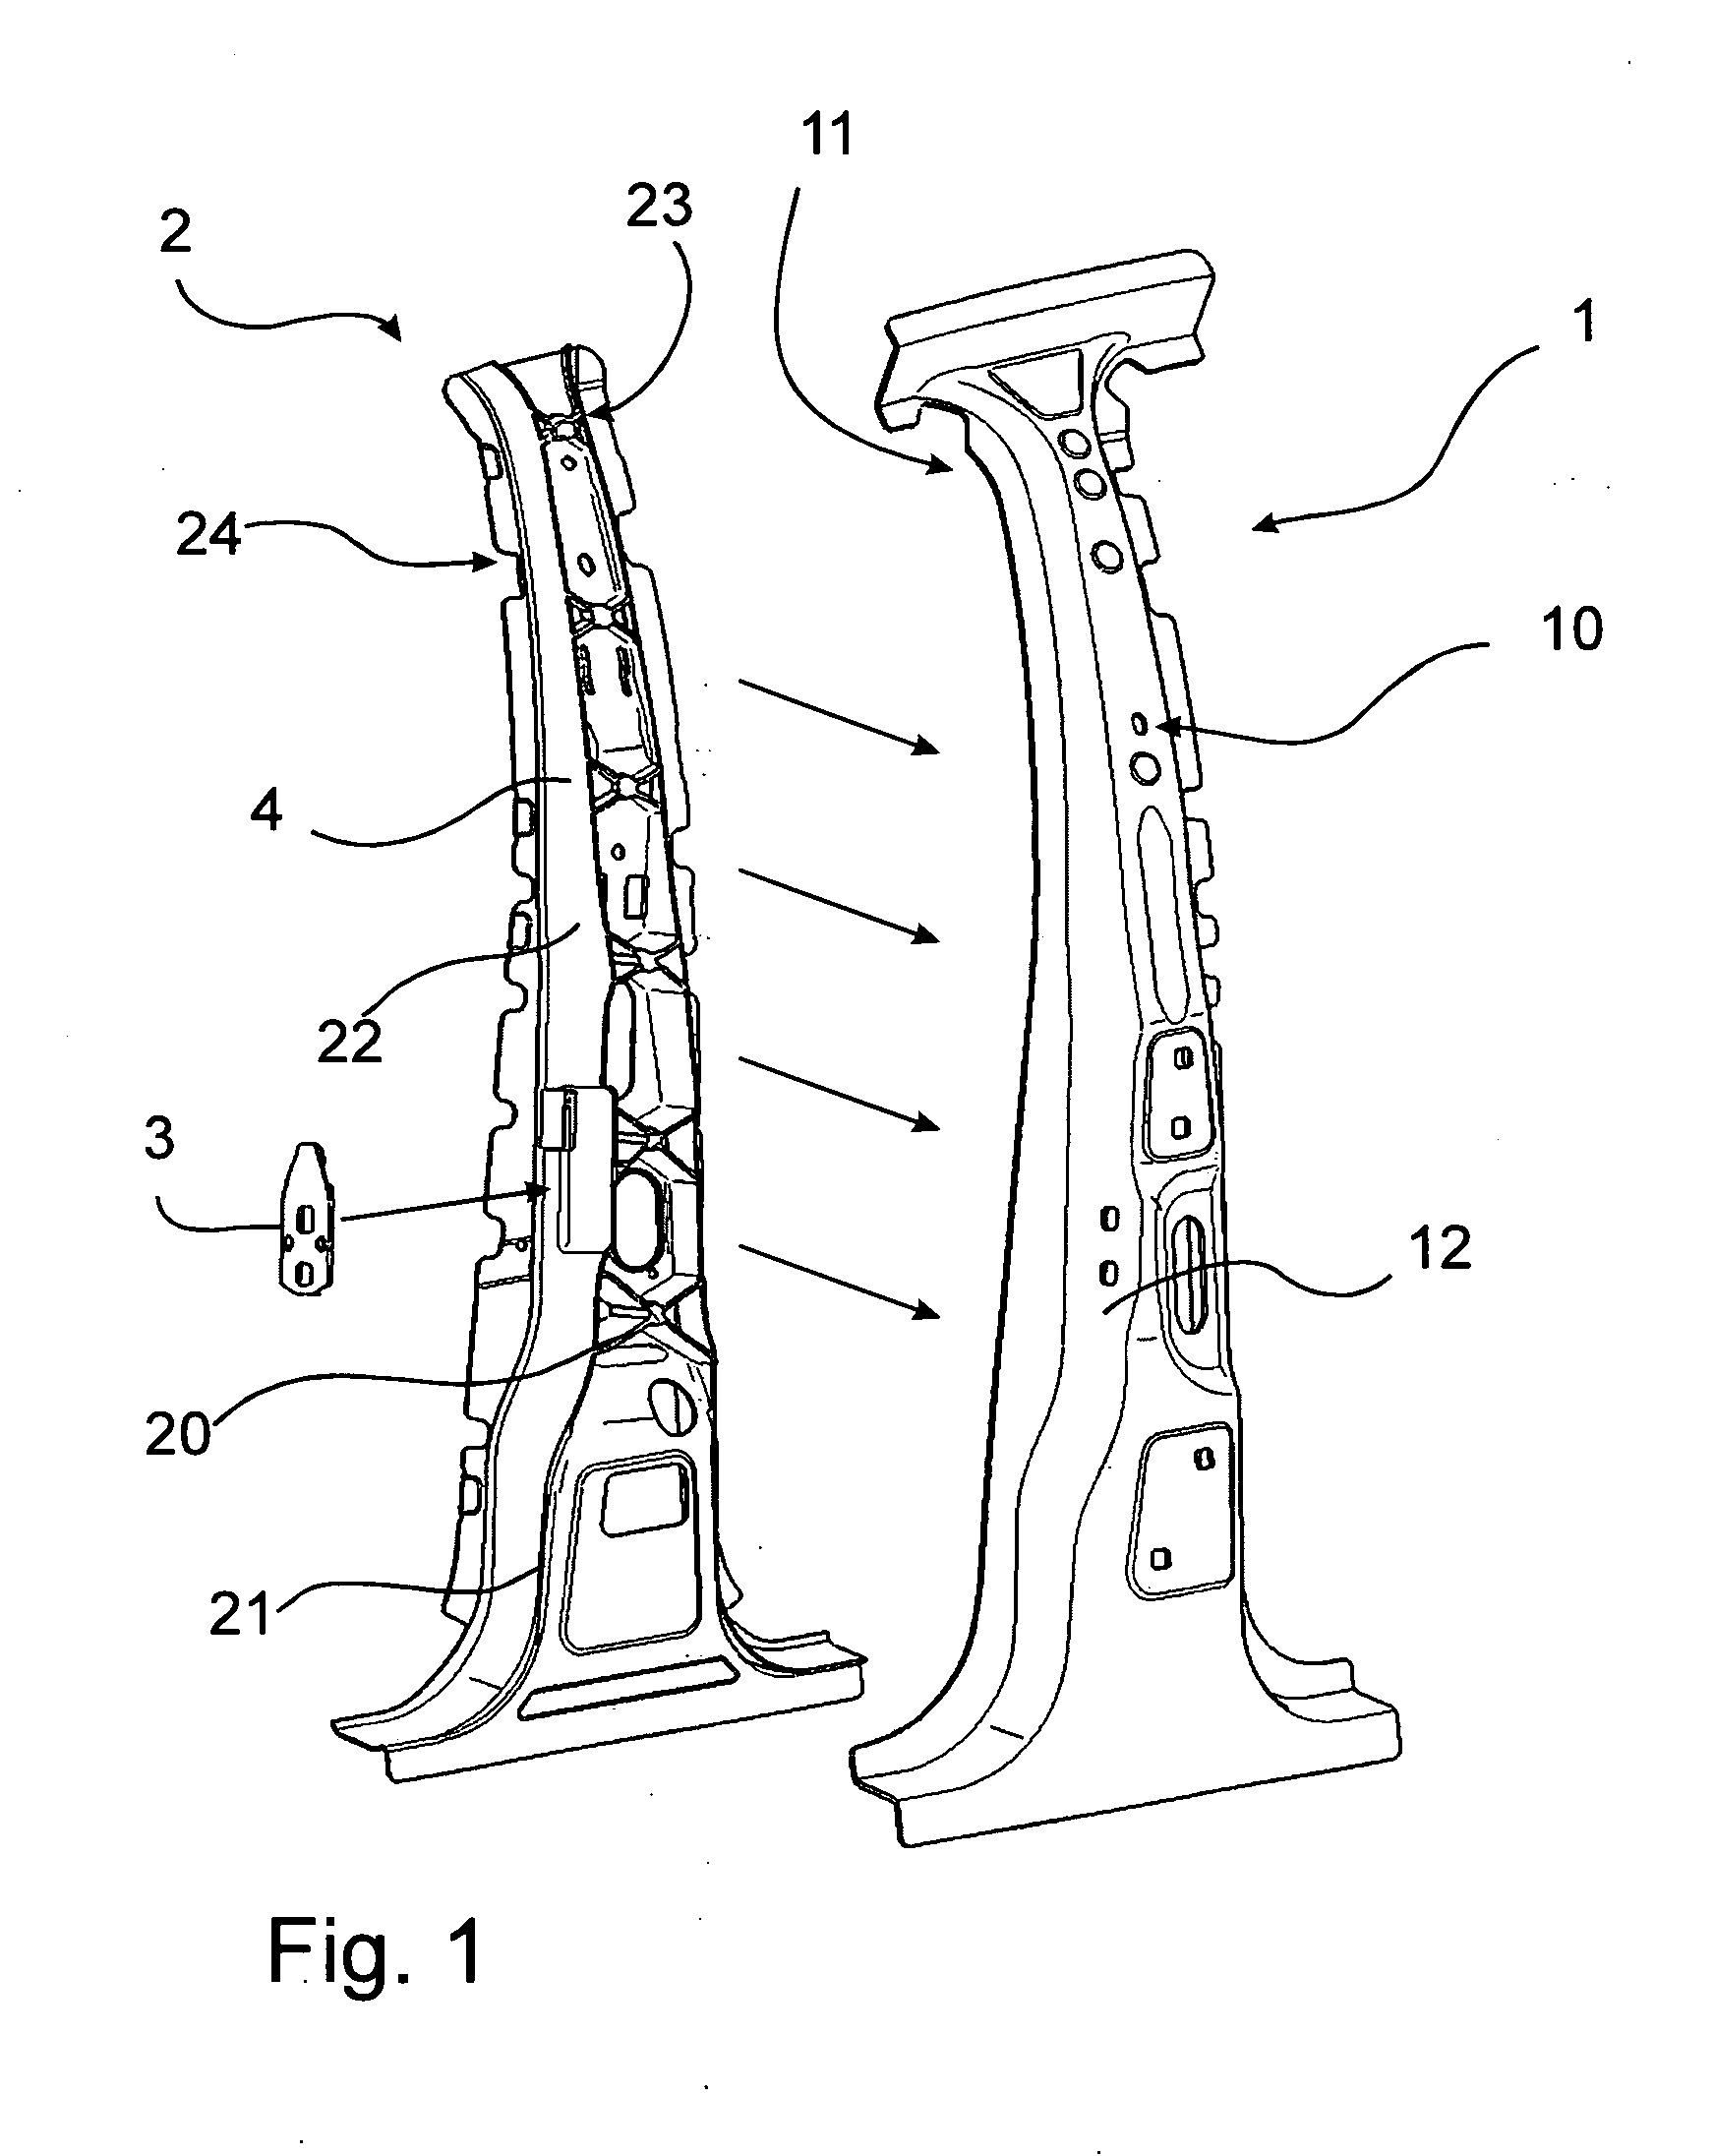 Vehicle part with structural reinforcement part